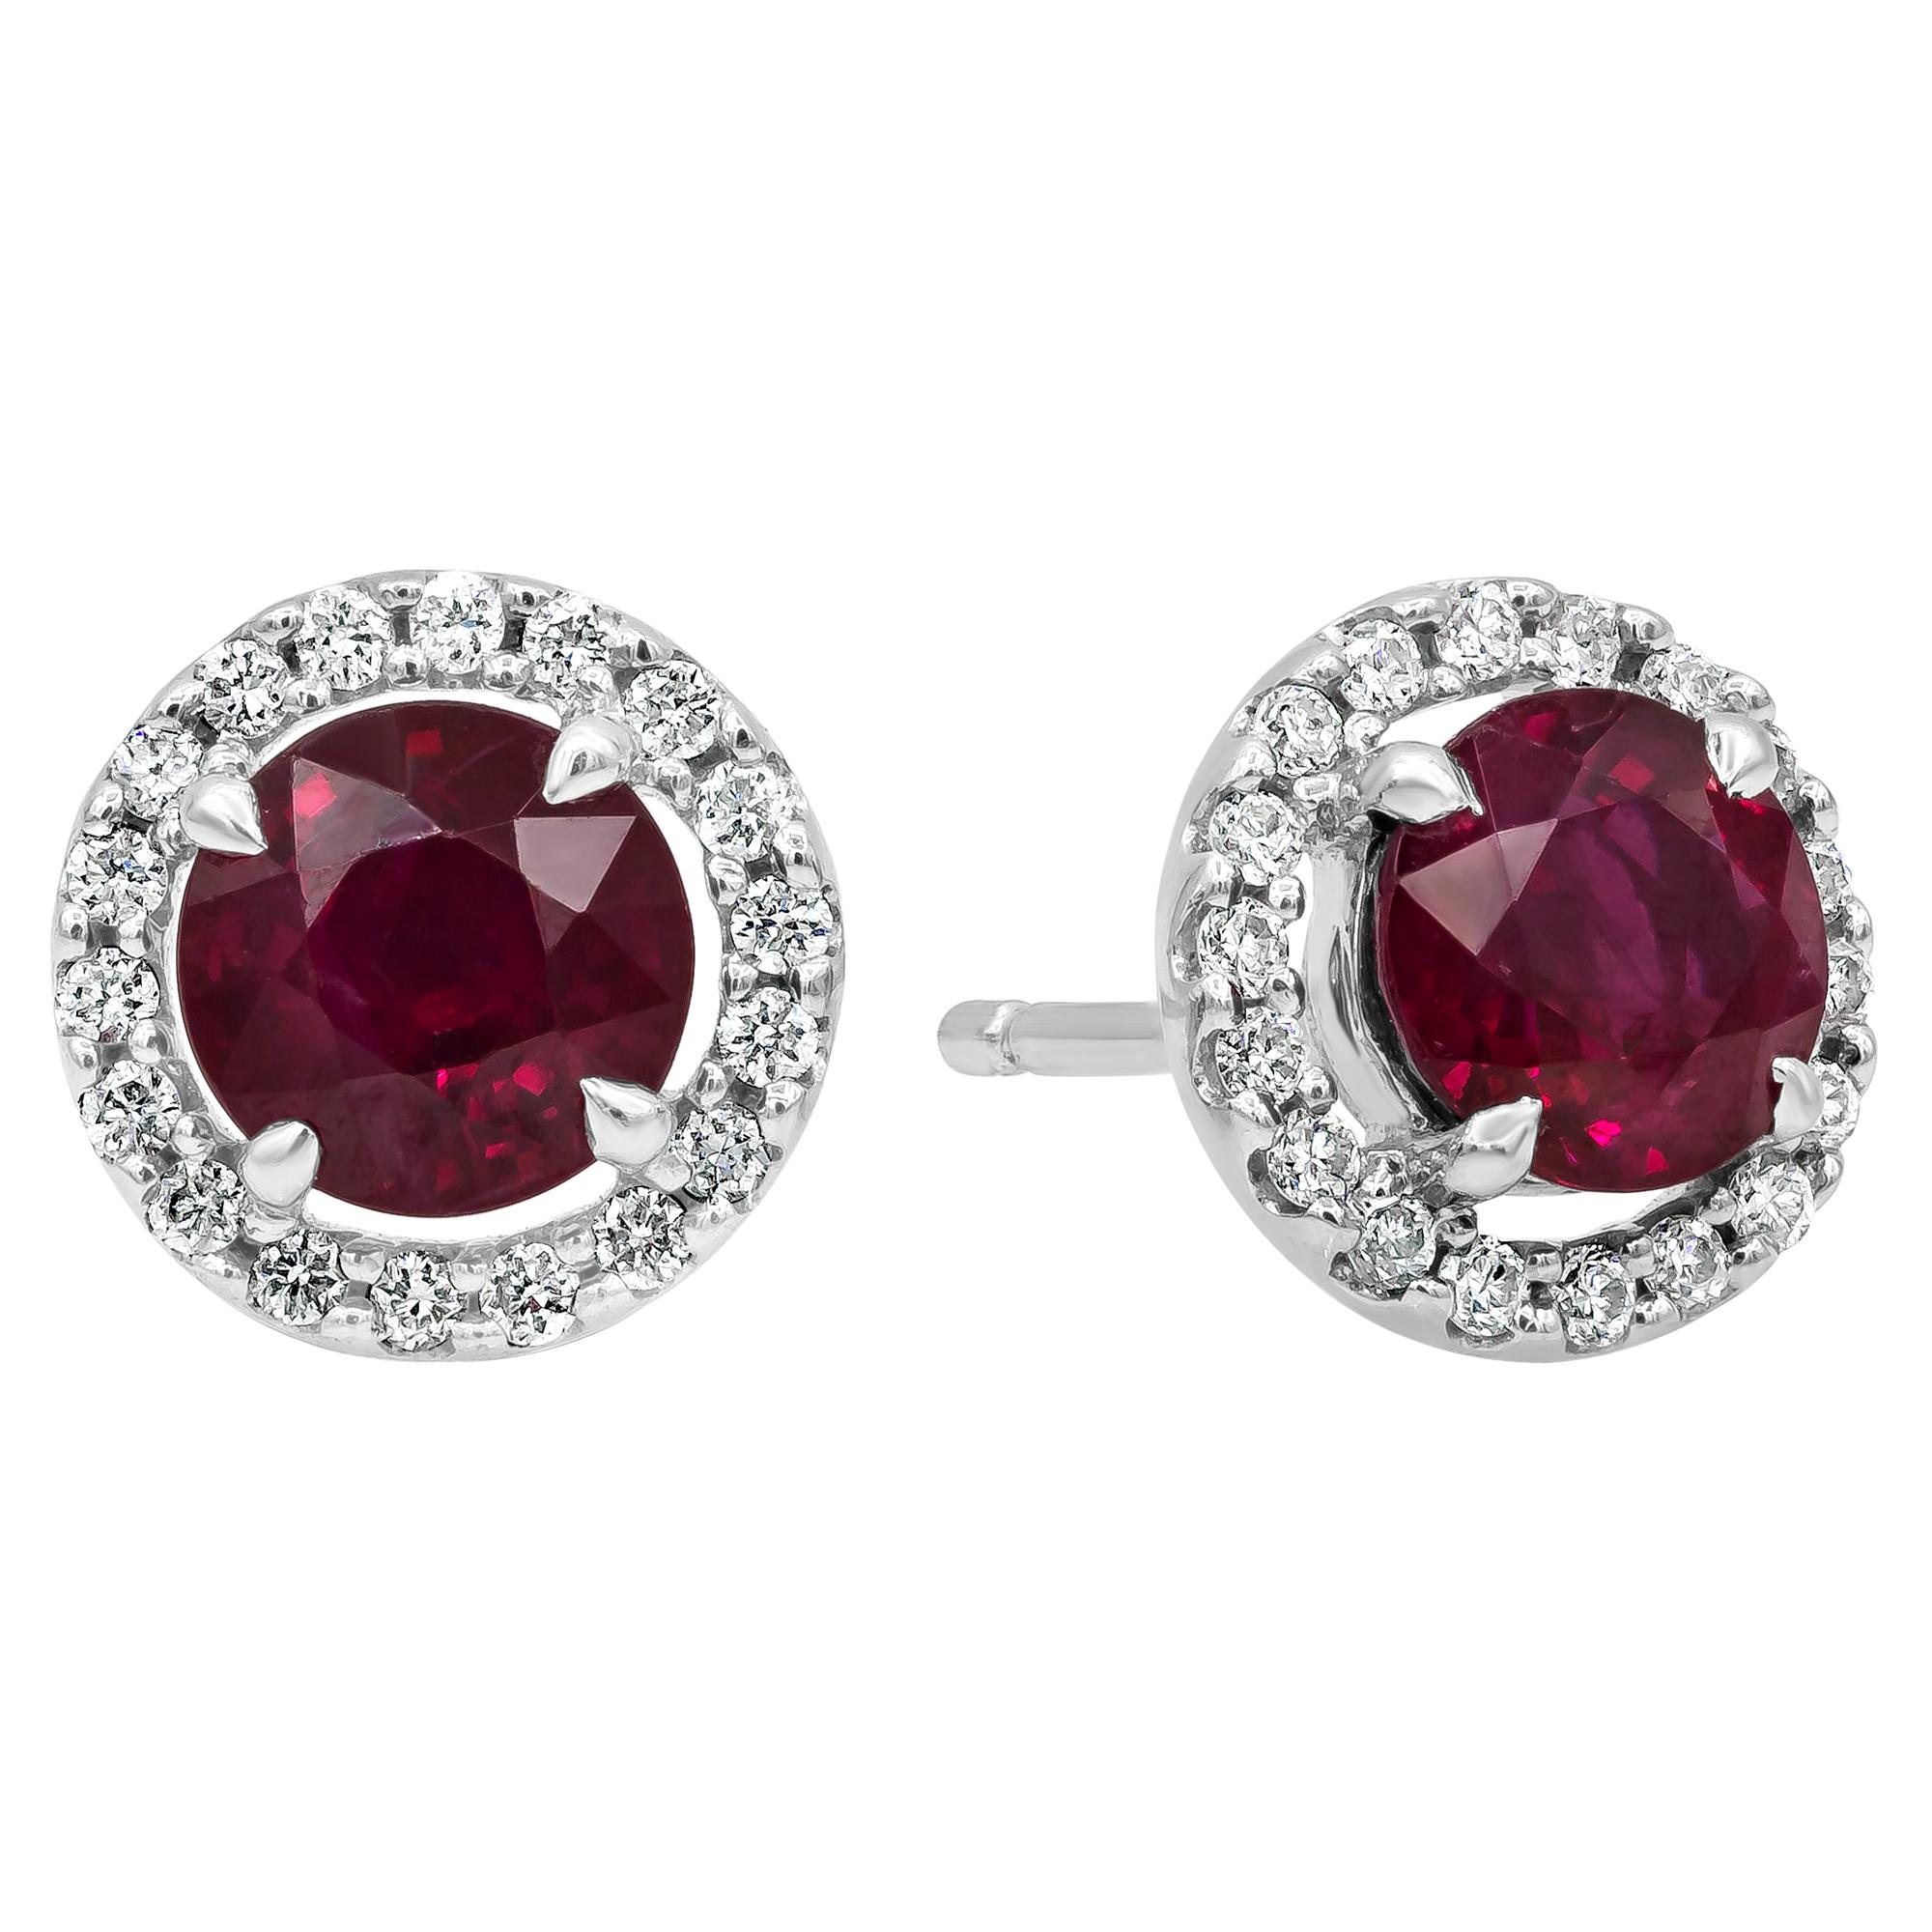 Roman Malakov 2.11 Carats Total Brilliant Round Ruby and Diamond Stud Earrings